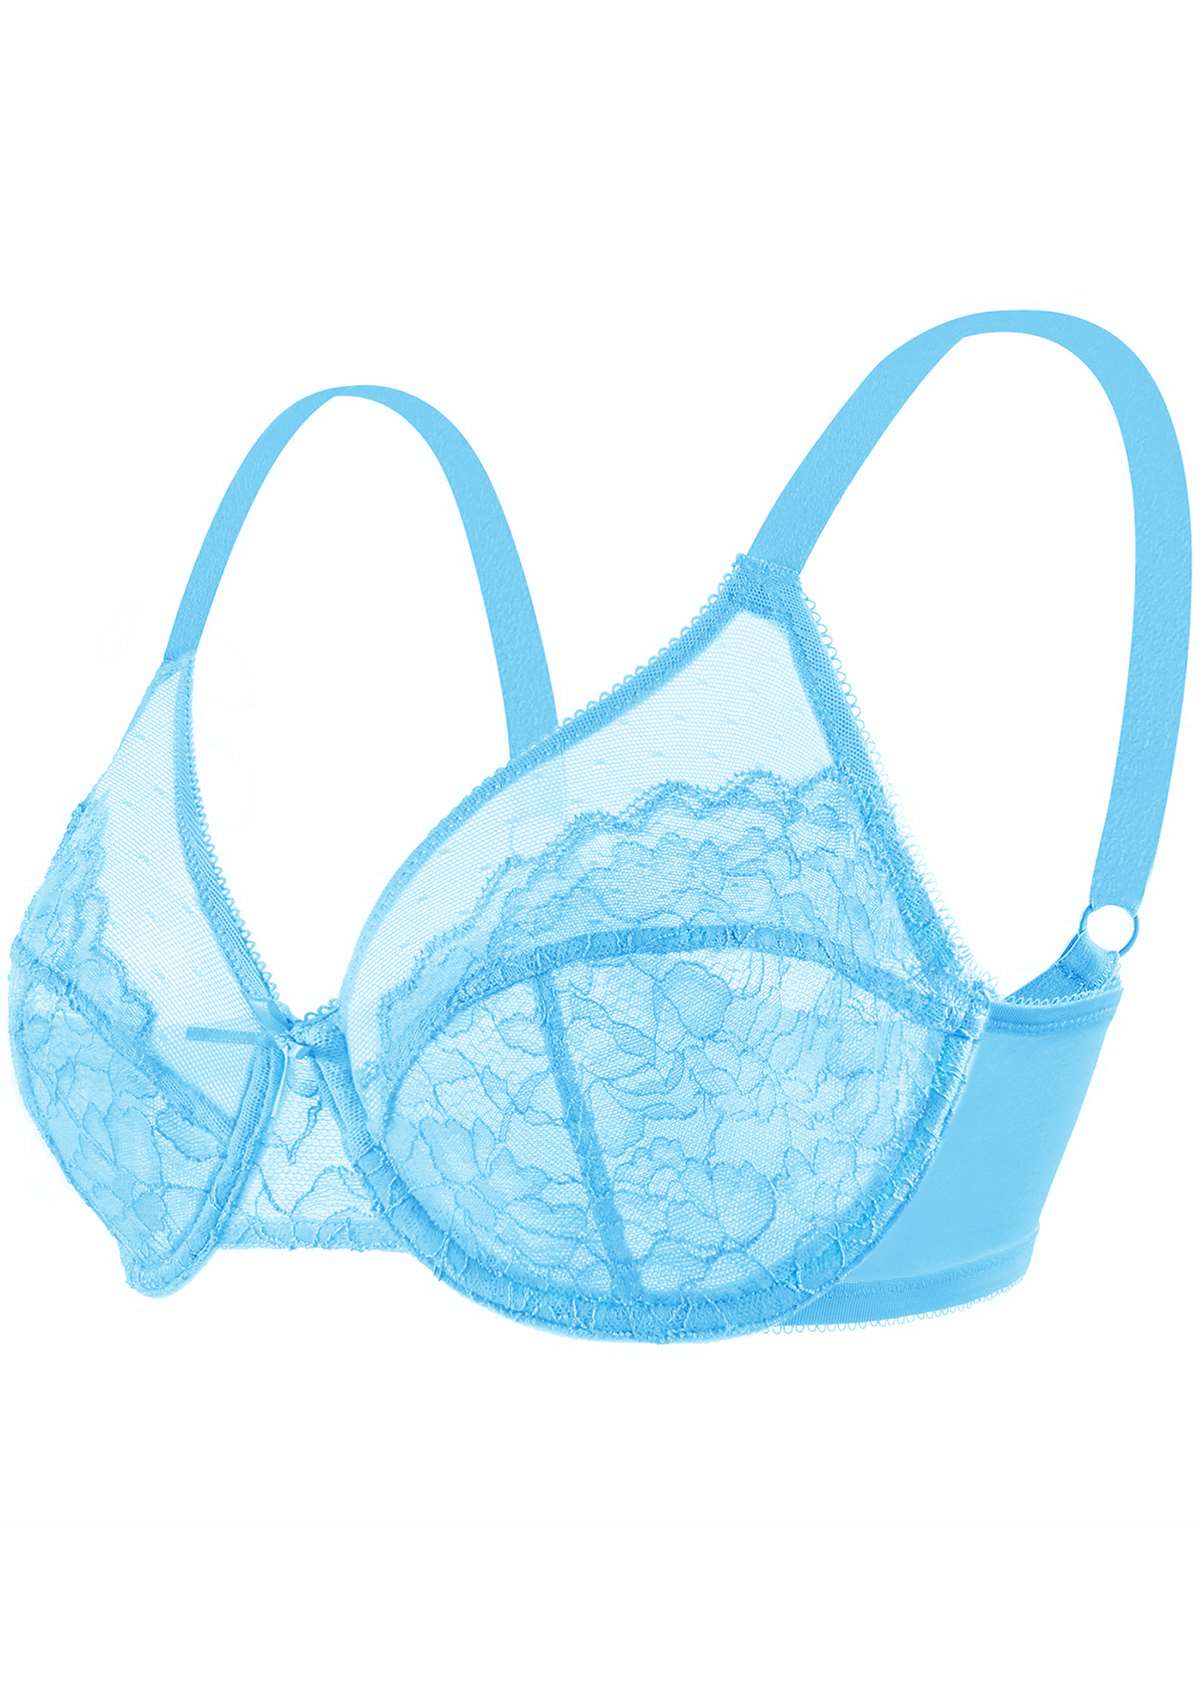 HSIA Enchante Minimizer Lace Bra: Full Support For Heavy Breasts - Capri Blue / 36 / H